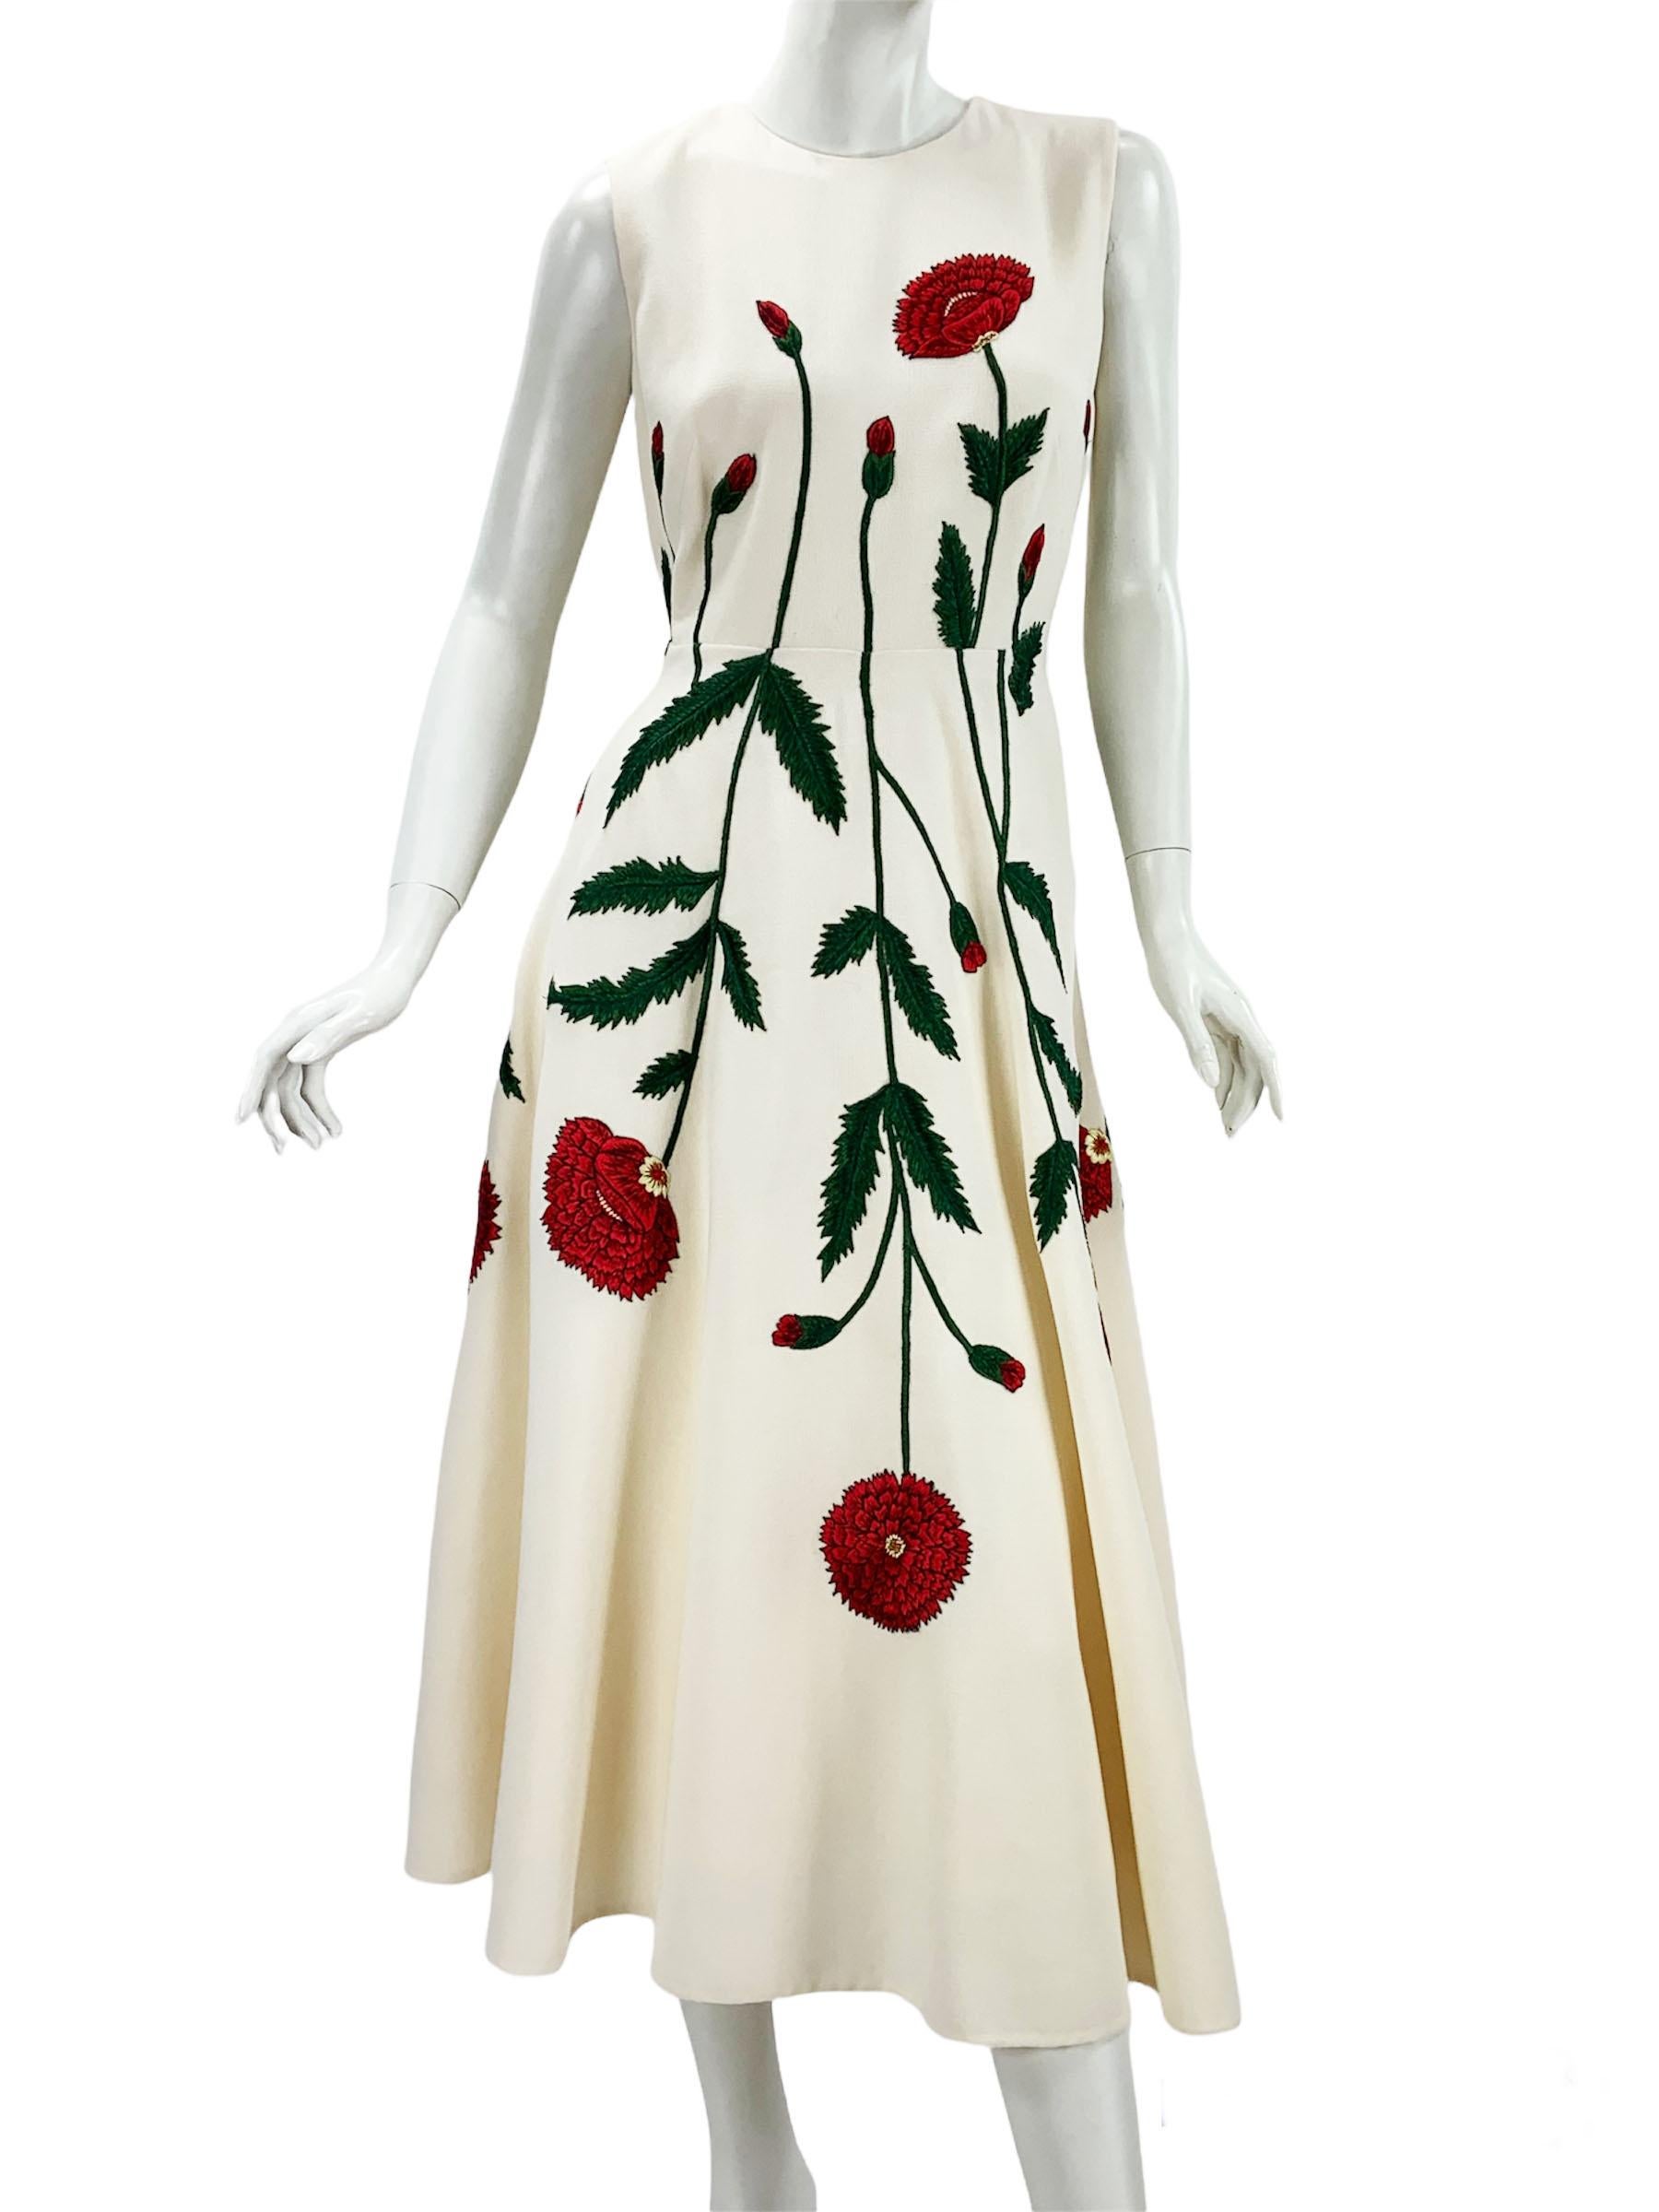 Beige NWT Oscar de la Renta S/S 2019 Poppy Embroidered Stretch-Wool Crepe Dress US 10 For Sale